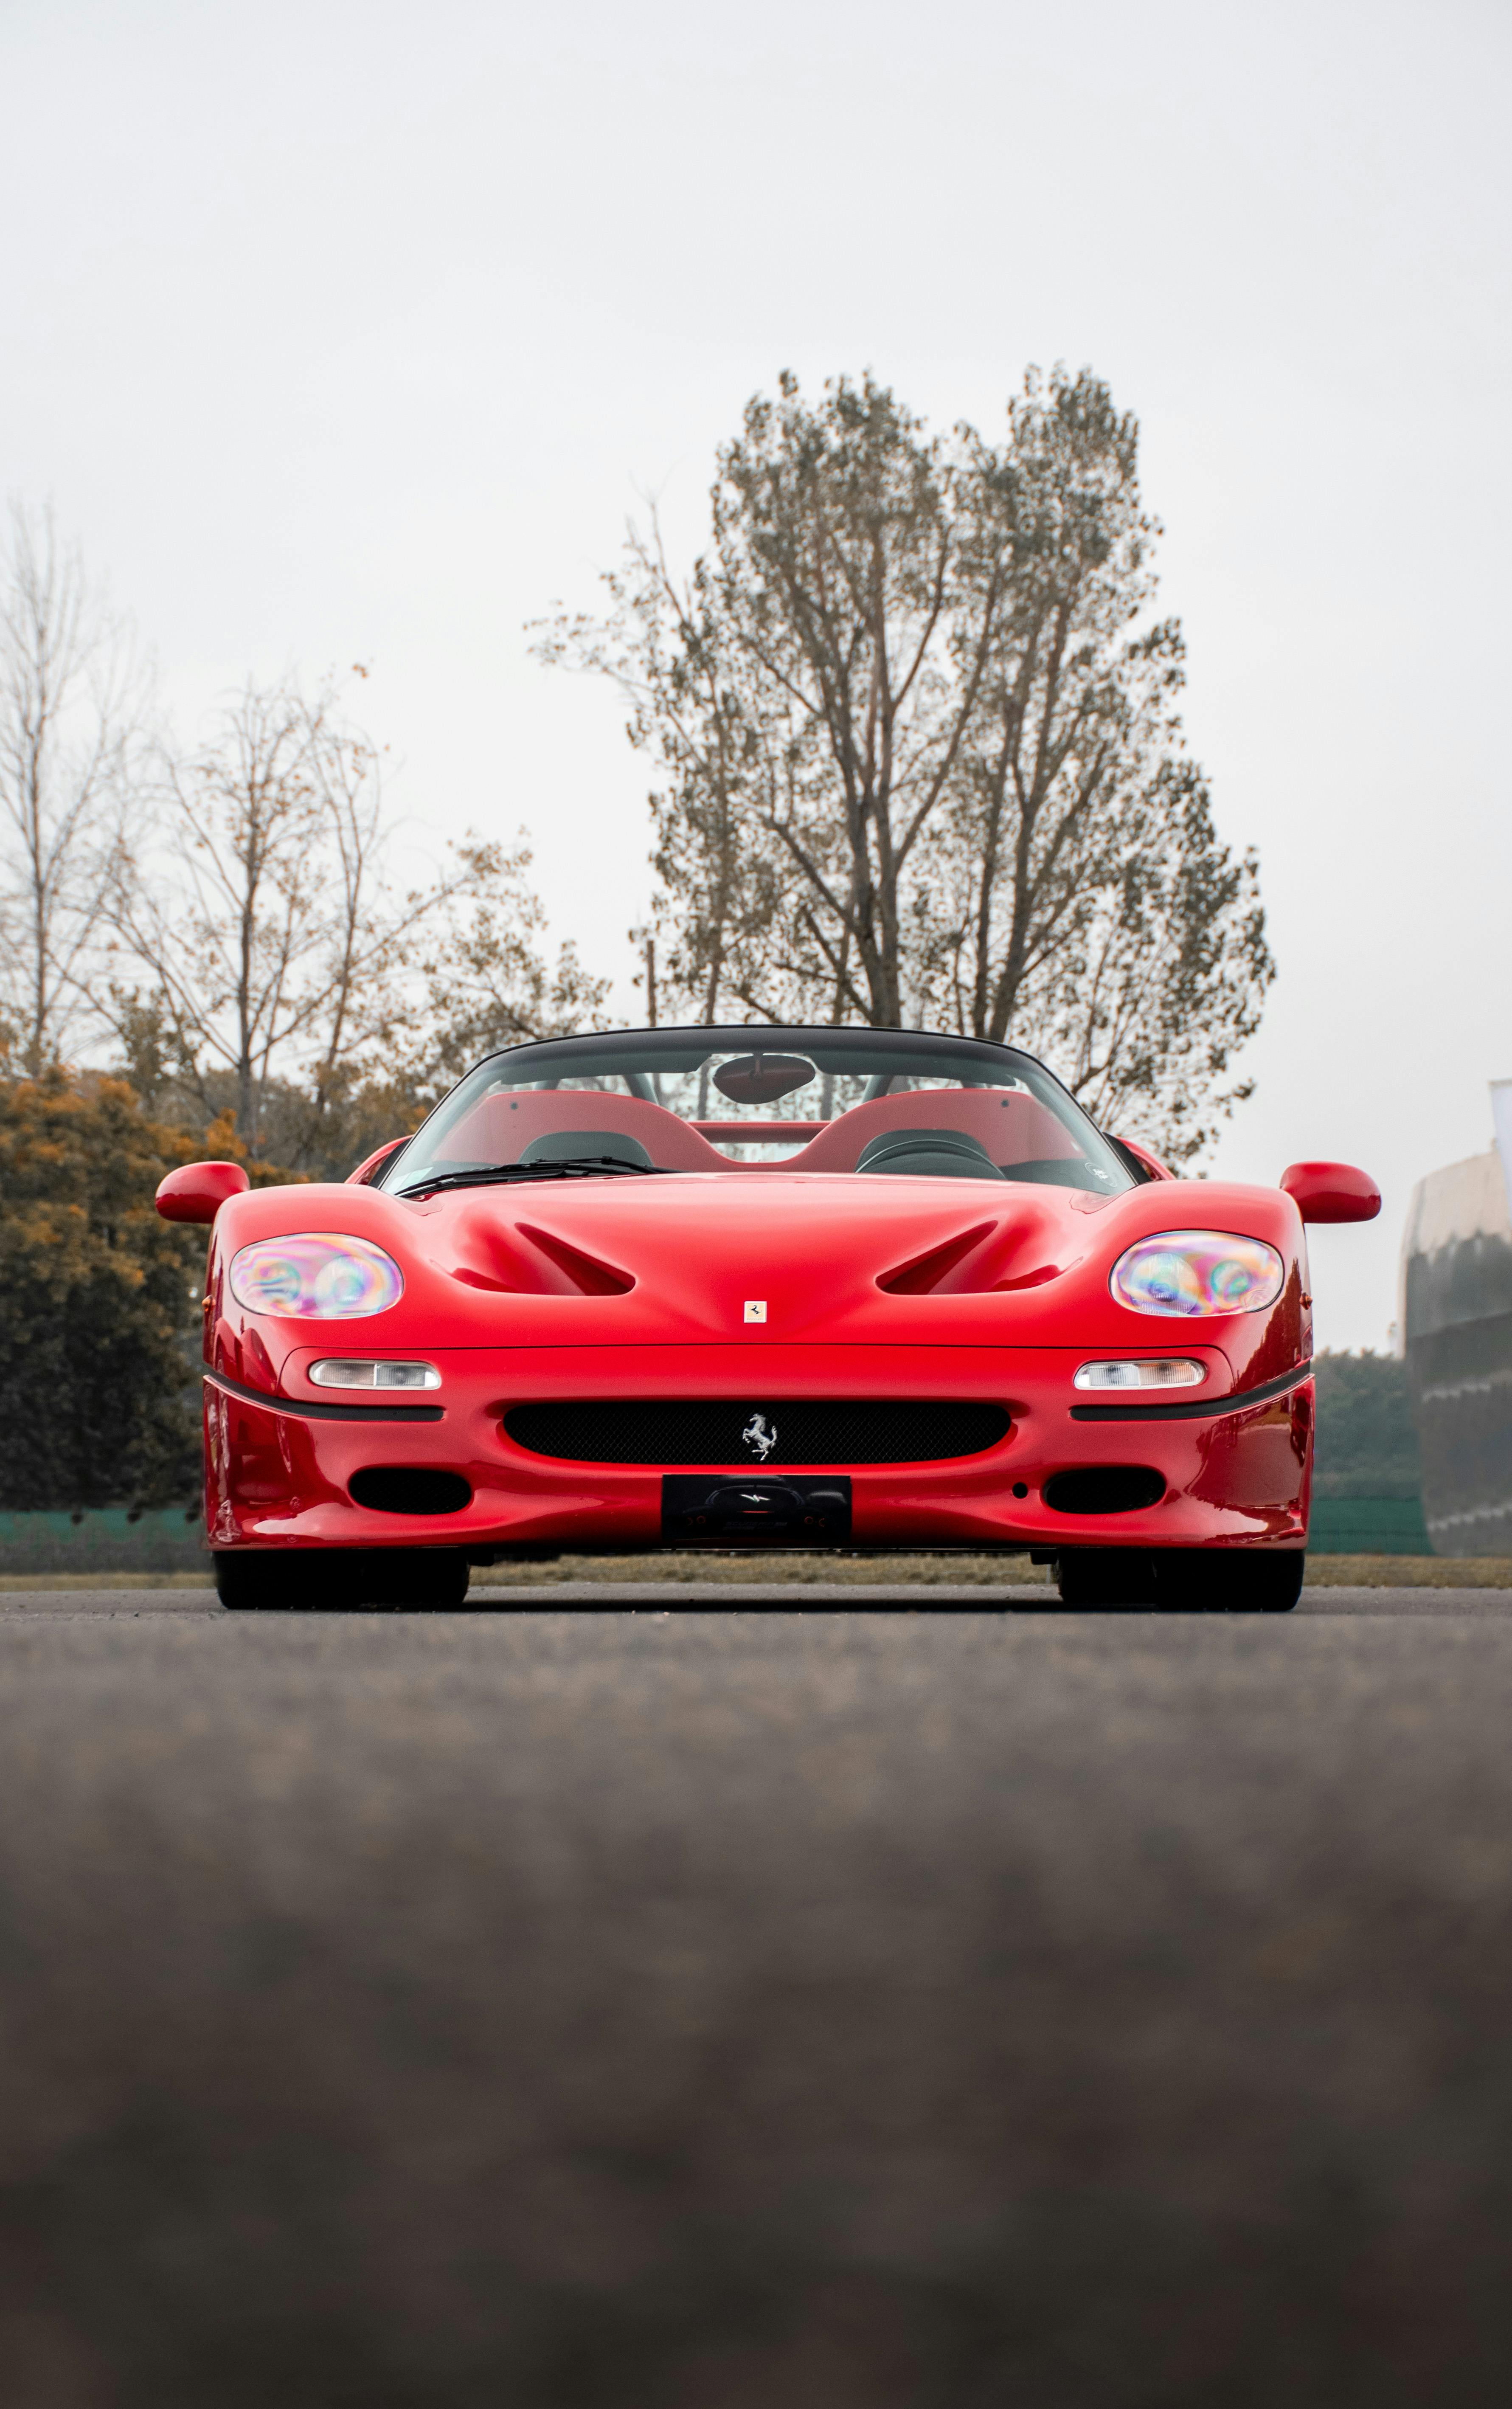 A Shiny Red Ferrari F50 GT · Free Stock Photo